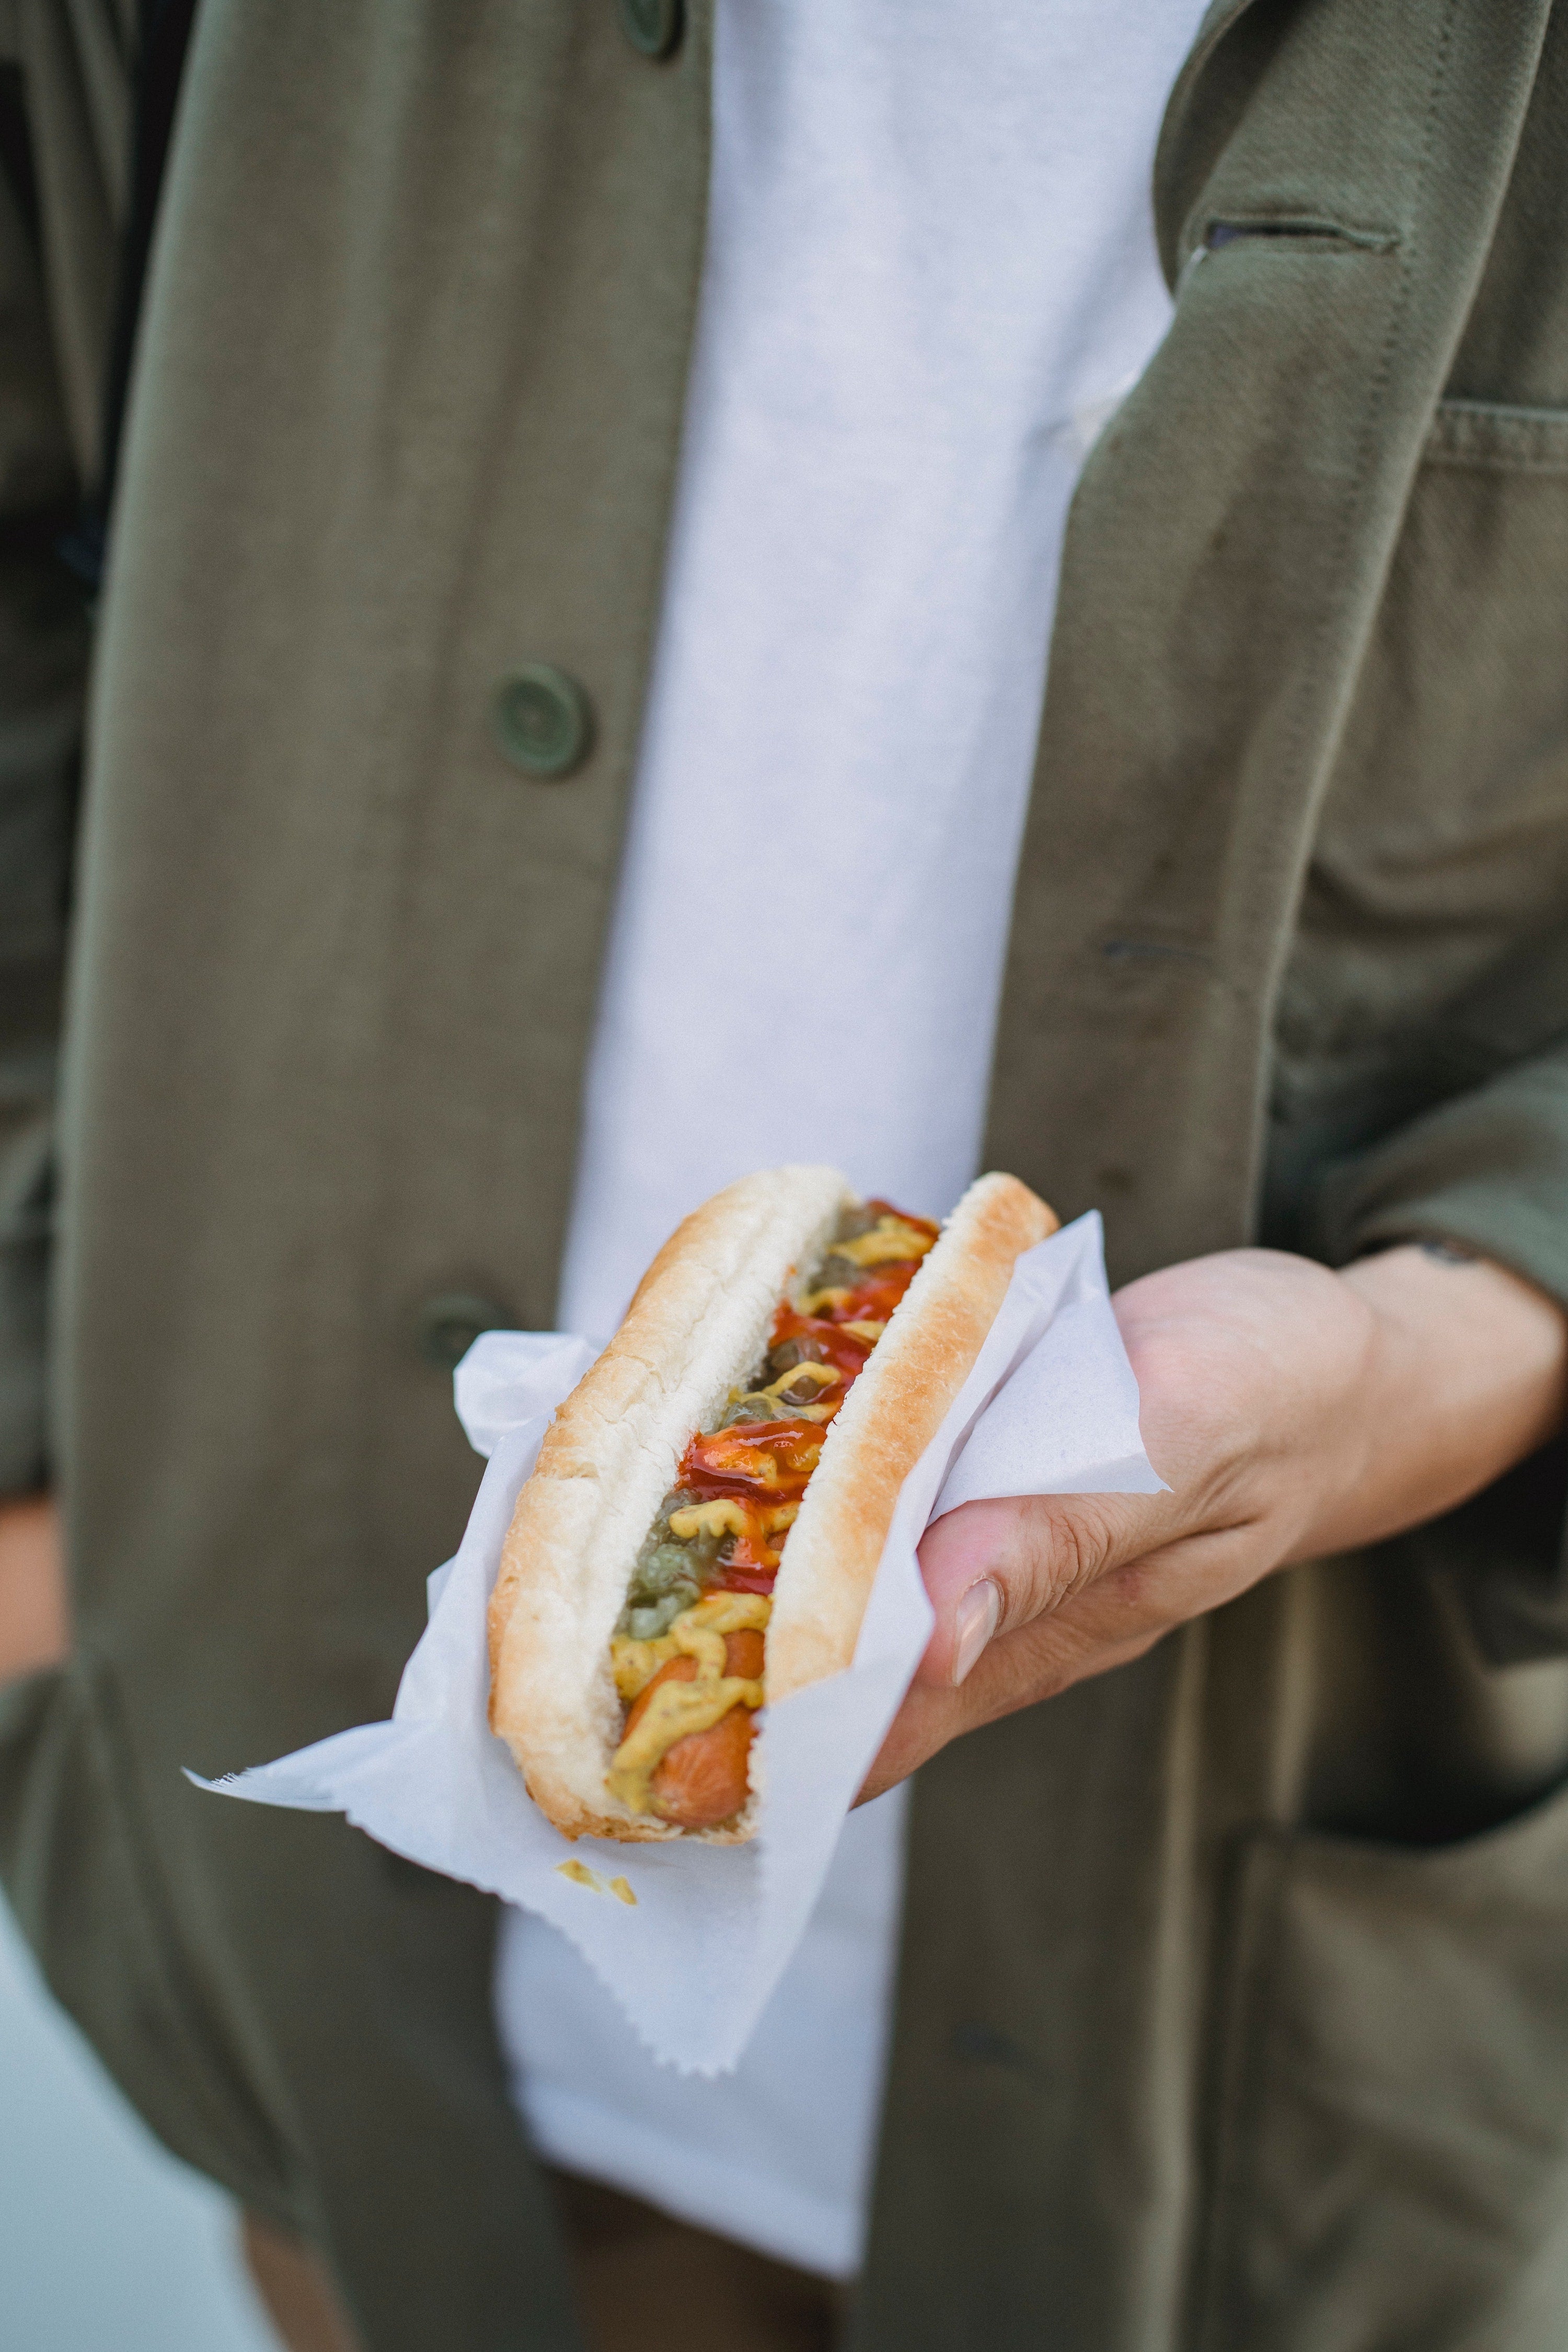 Person holding a hotdog